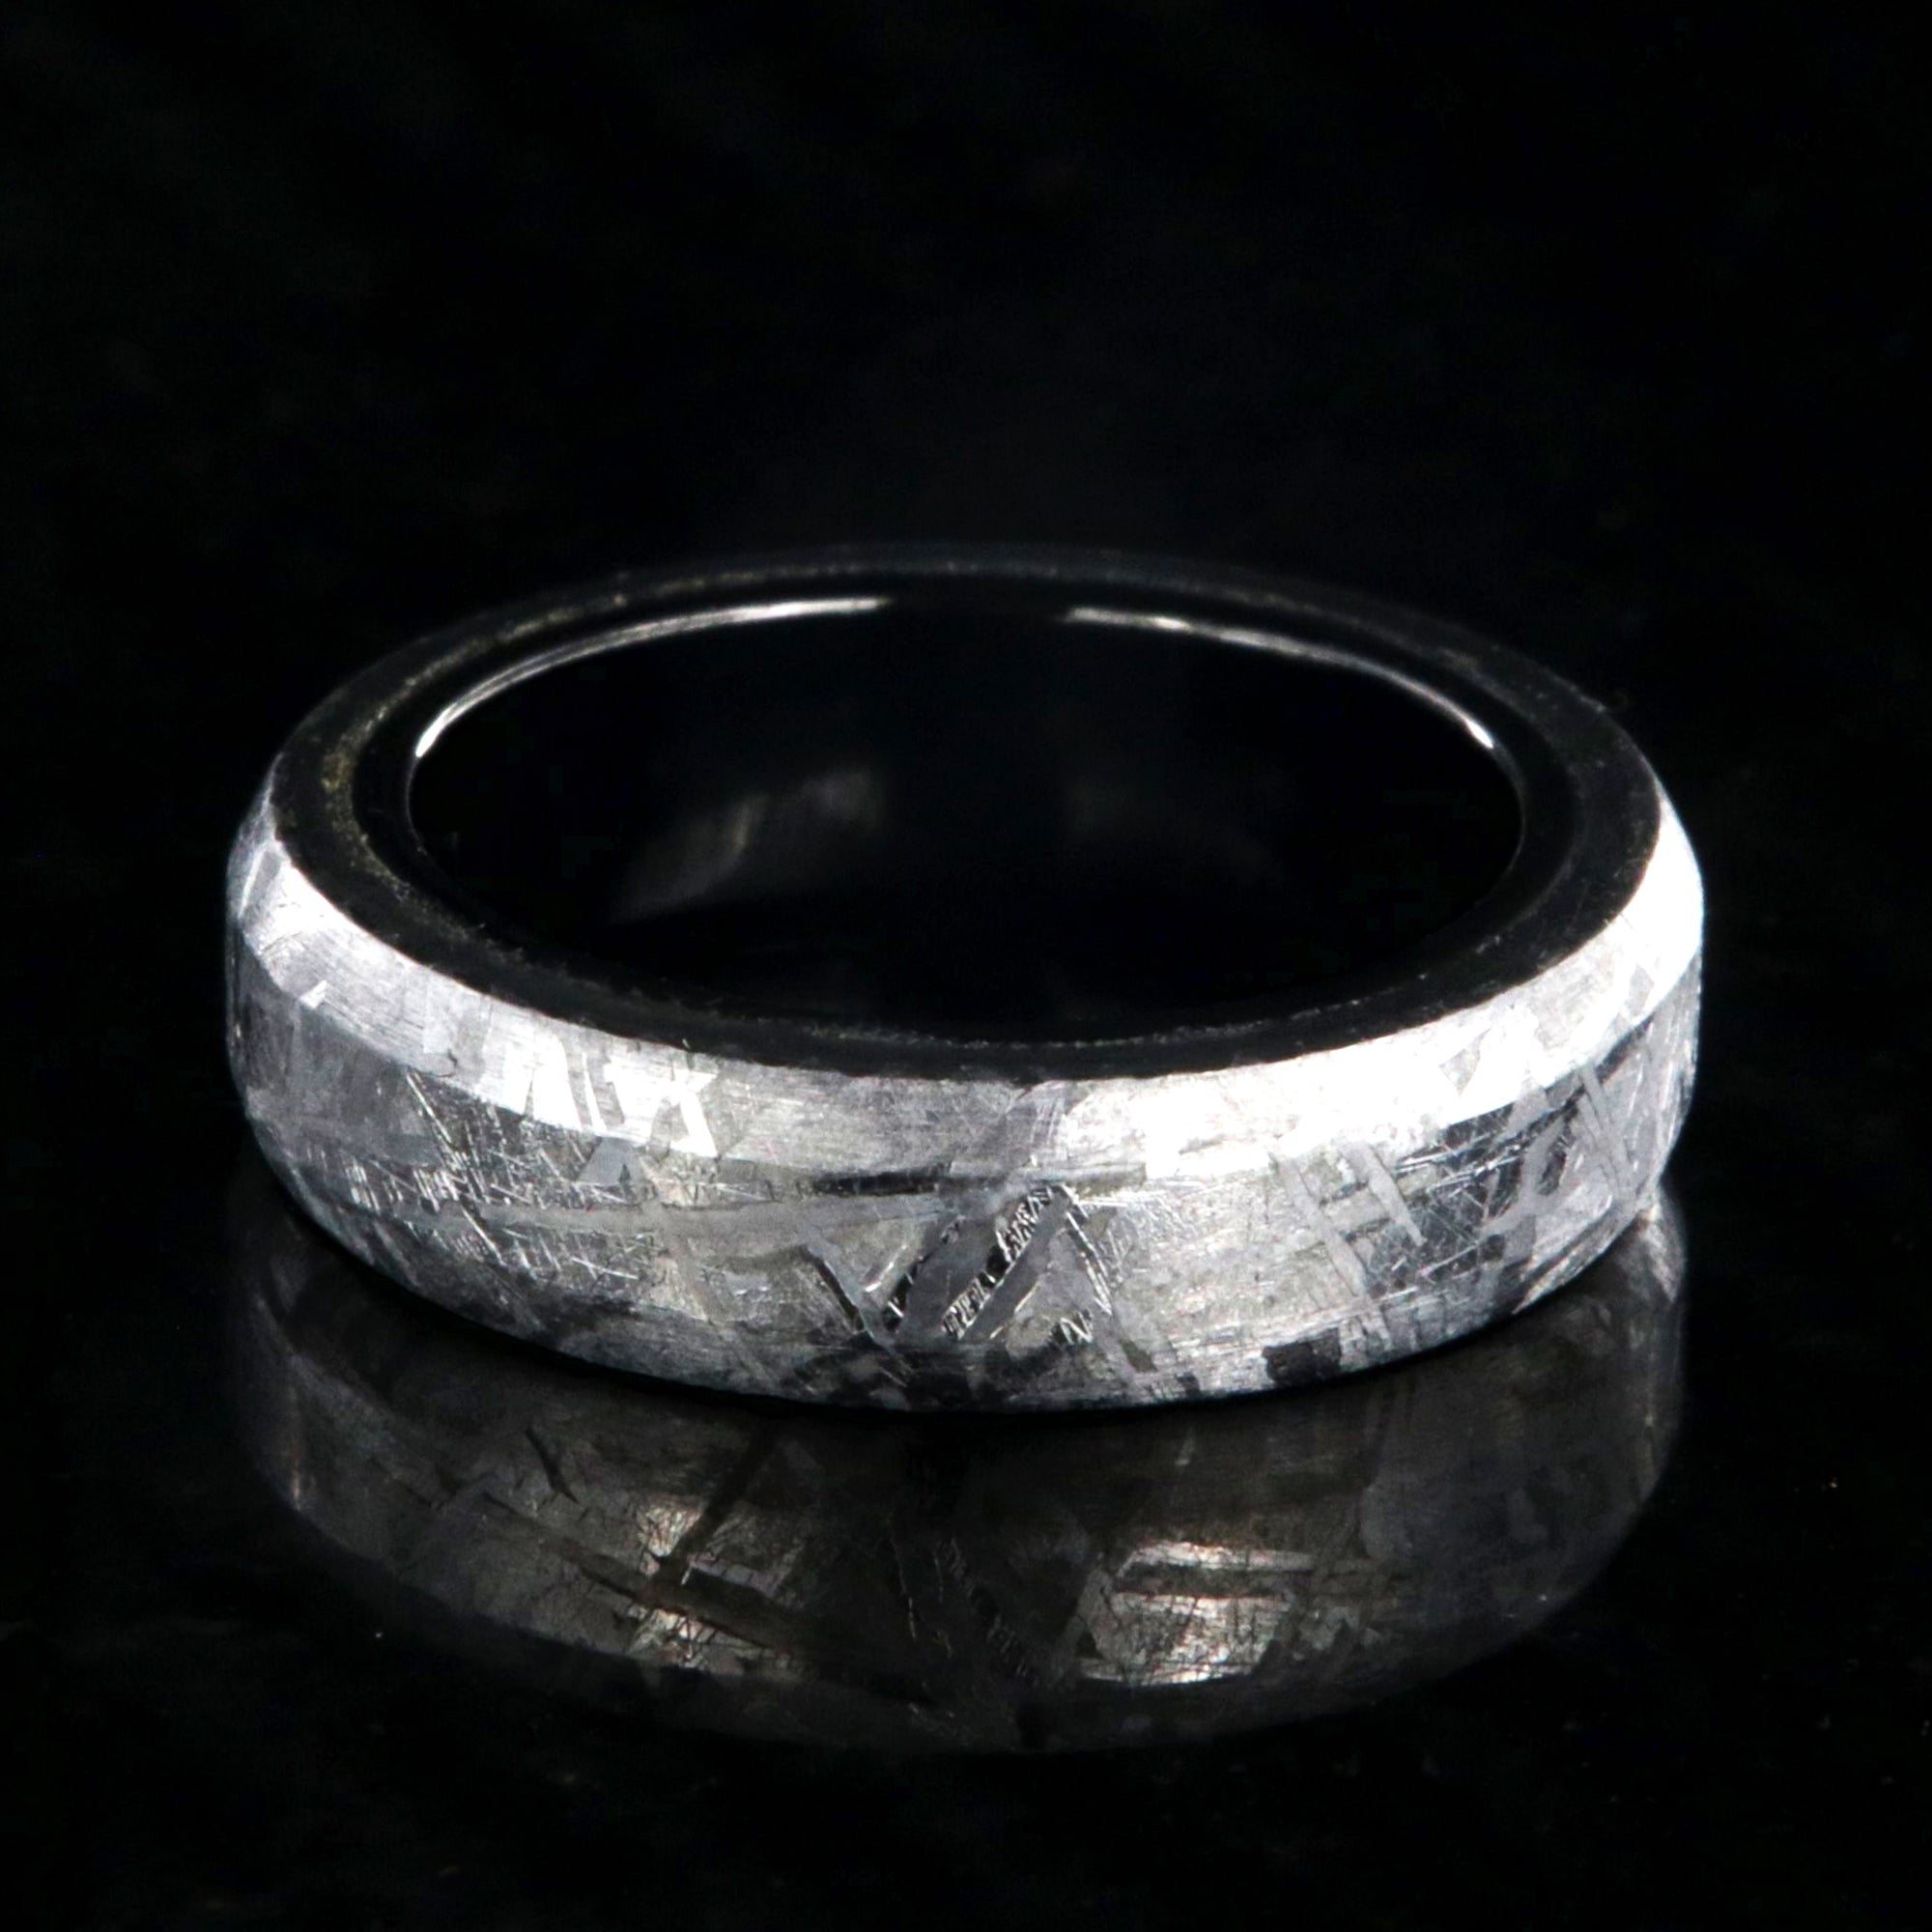 5mm wide meteorite wedding band with black titanium sleeve and beveled edges